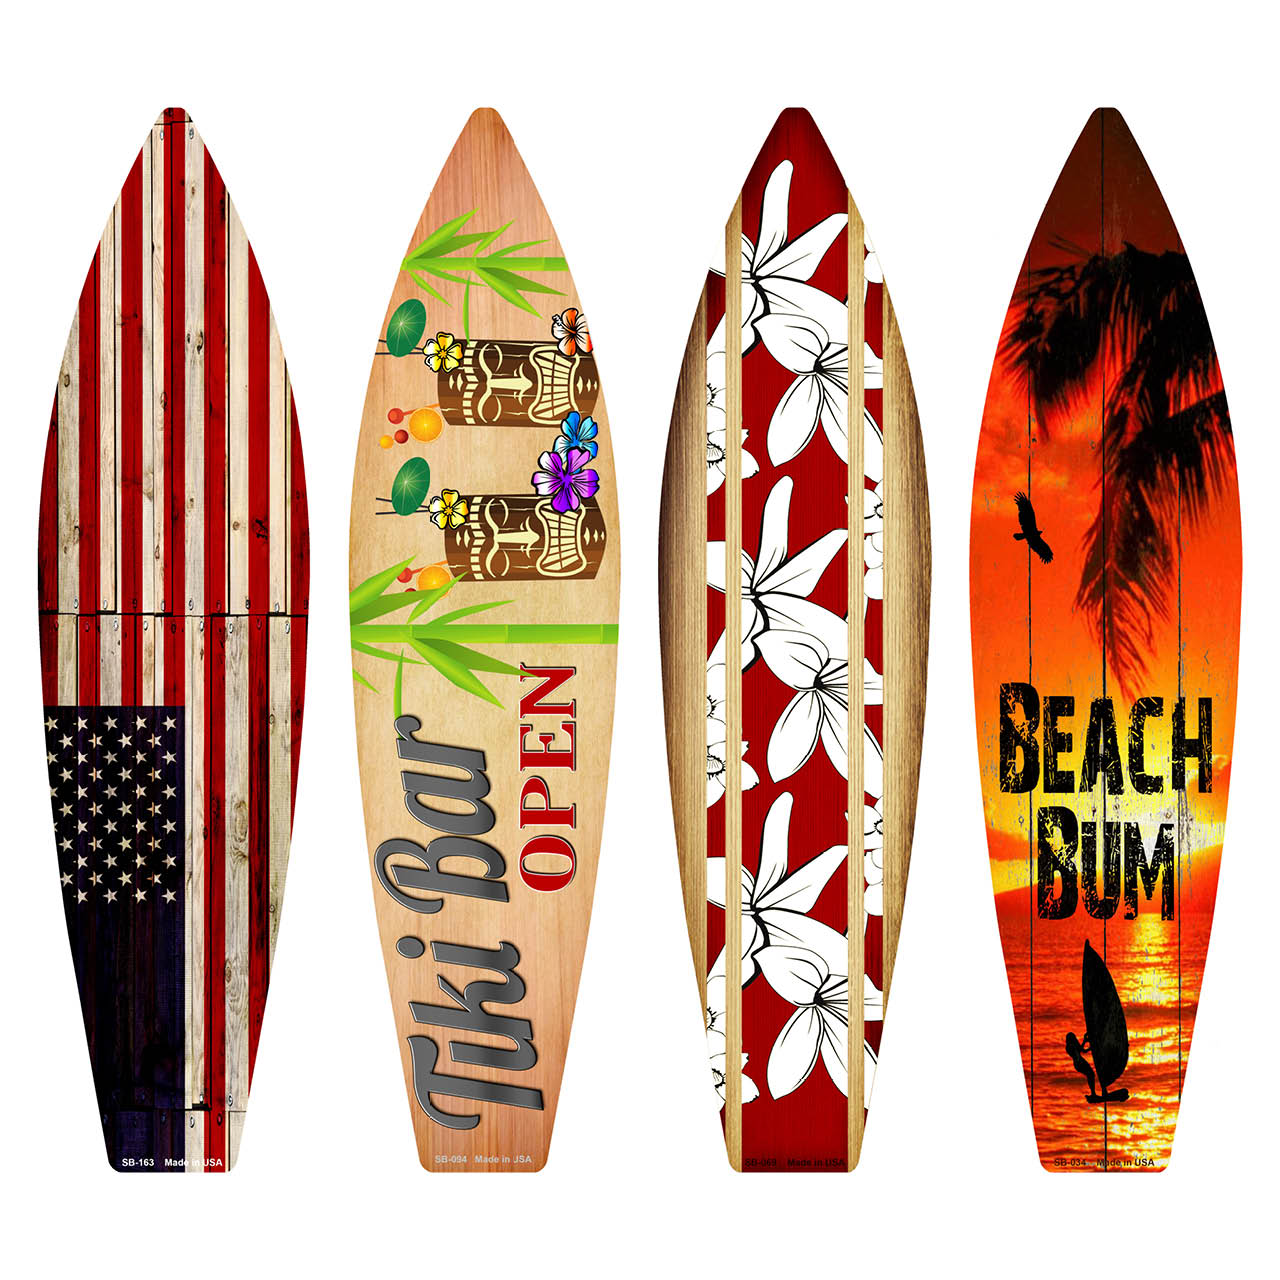 American Beach Bum Surfboard Set Wholesale Novelty Metal Set of 4 SB-Pack-09